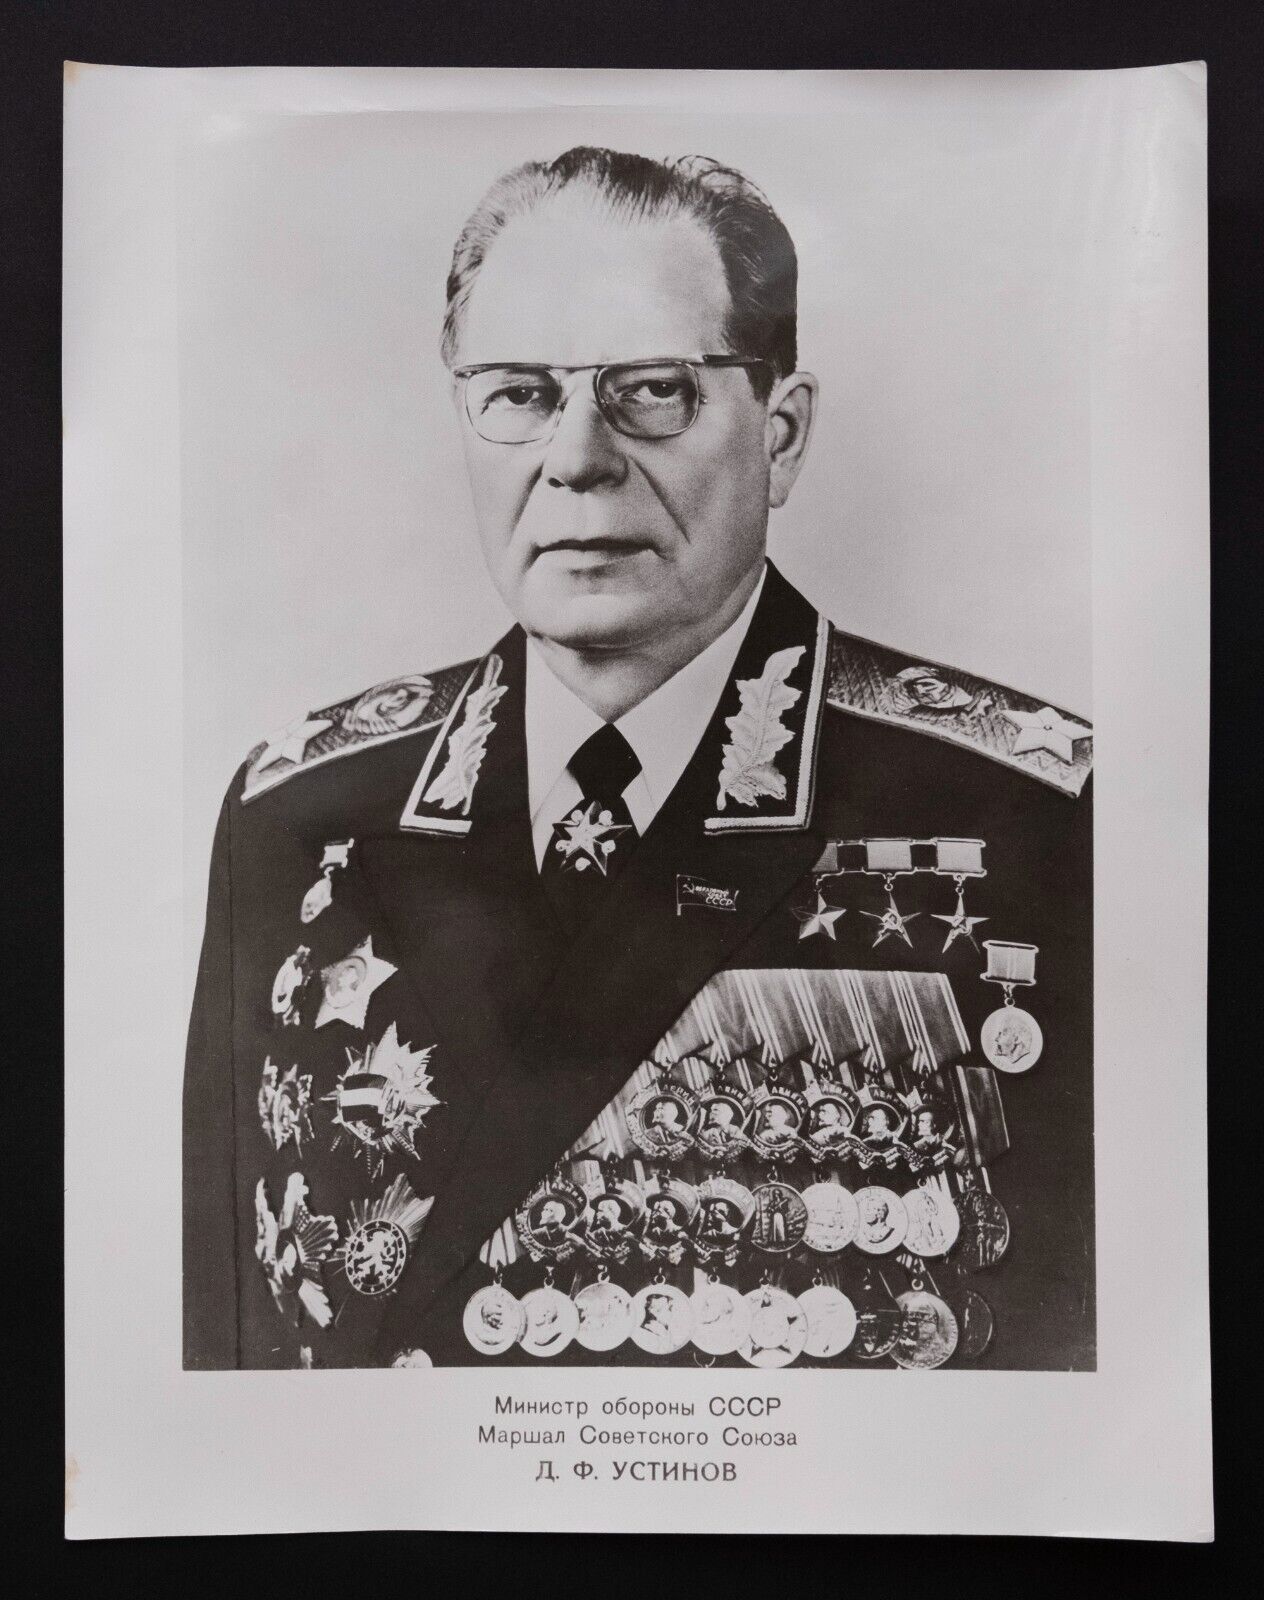 Soviet Army-Dmitry Ustinov, Vintage Photo, Marshal of the Soviet Union